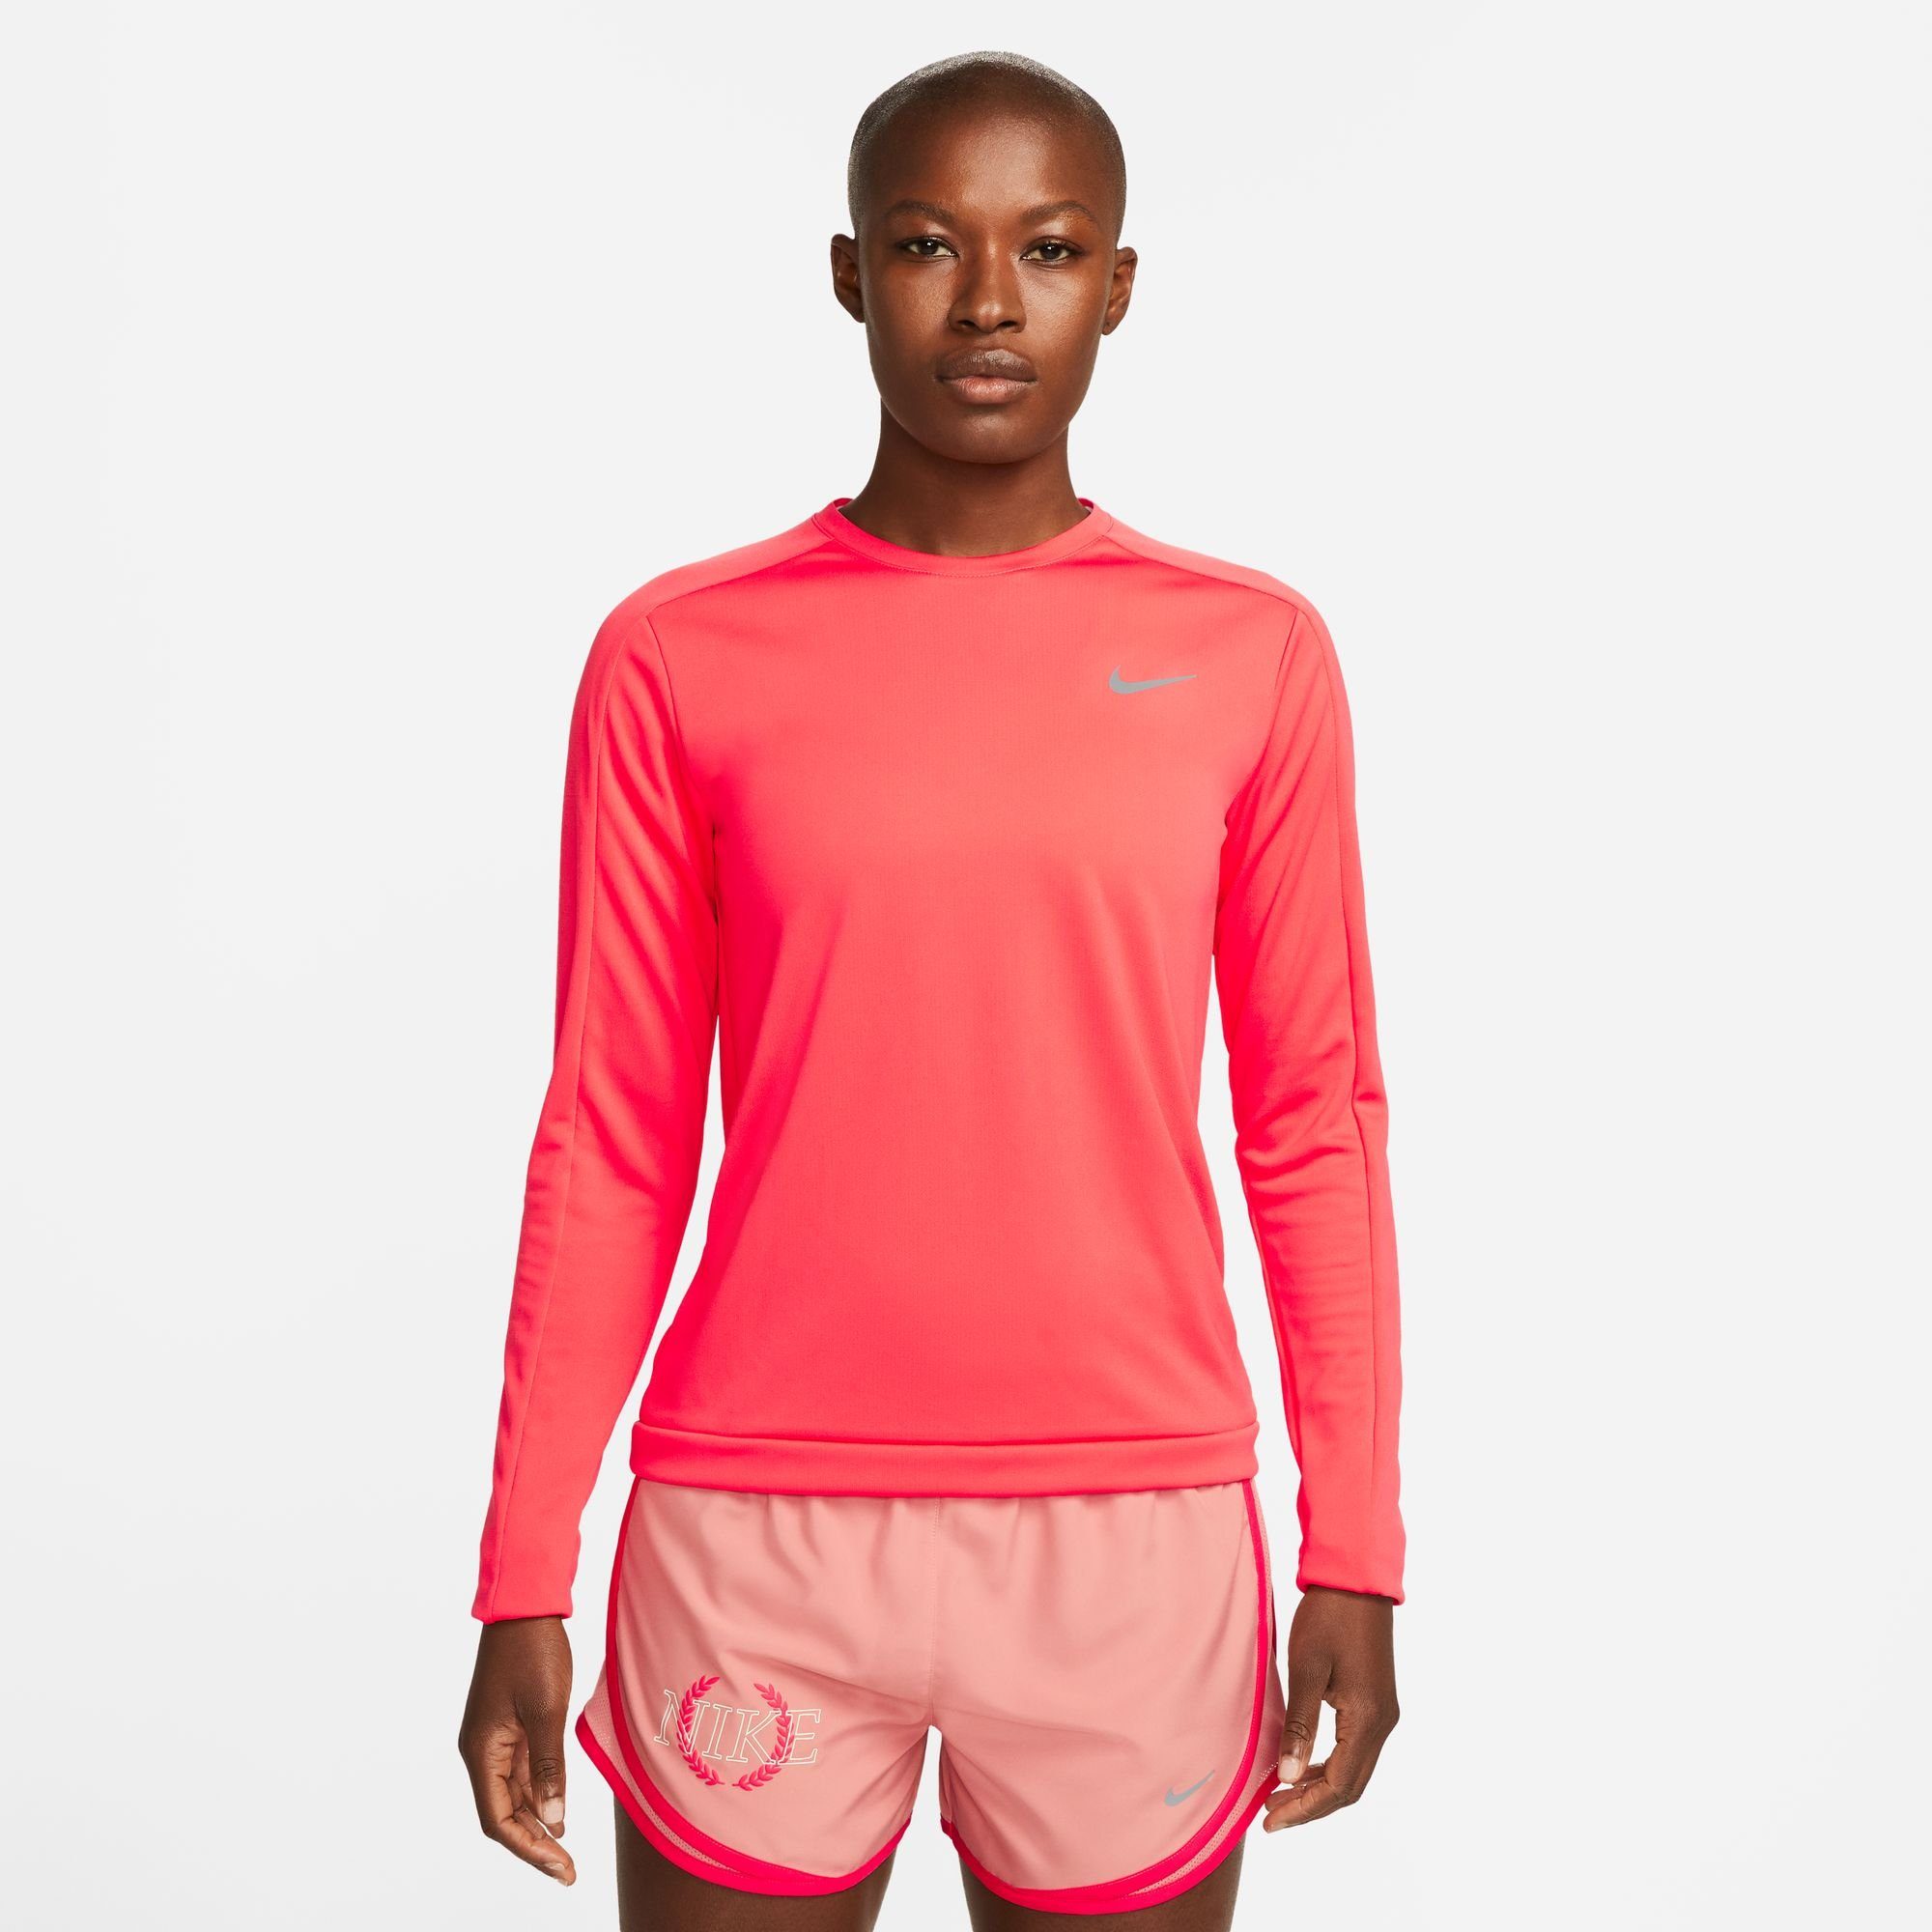 SILV EMBER TOP WOMEN'S RUNNING CREW-NECK Laufshirt GLOW/REFLECTIVE DRI-FIT Nike